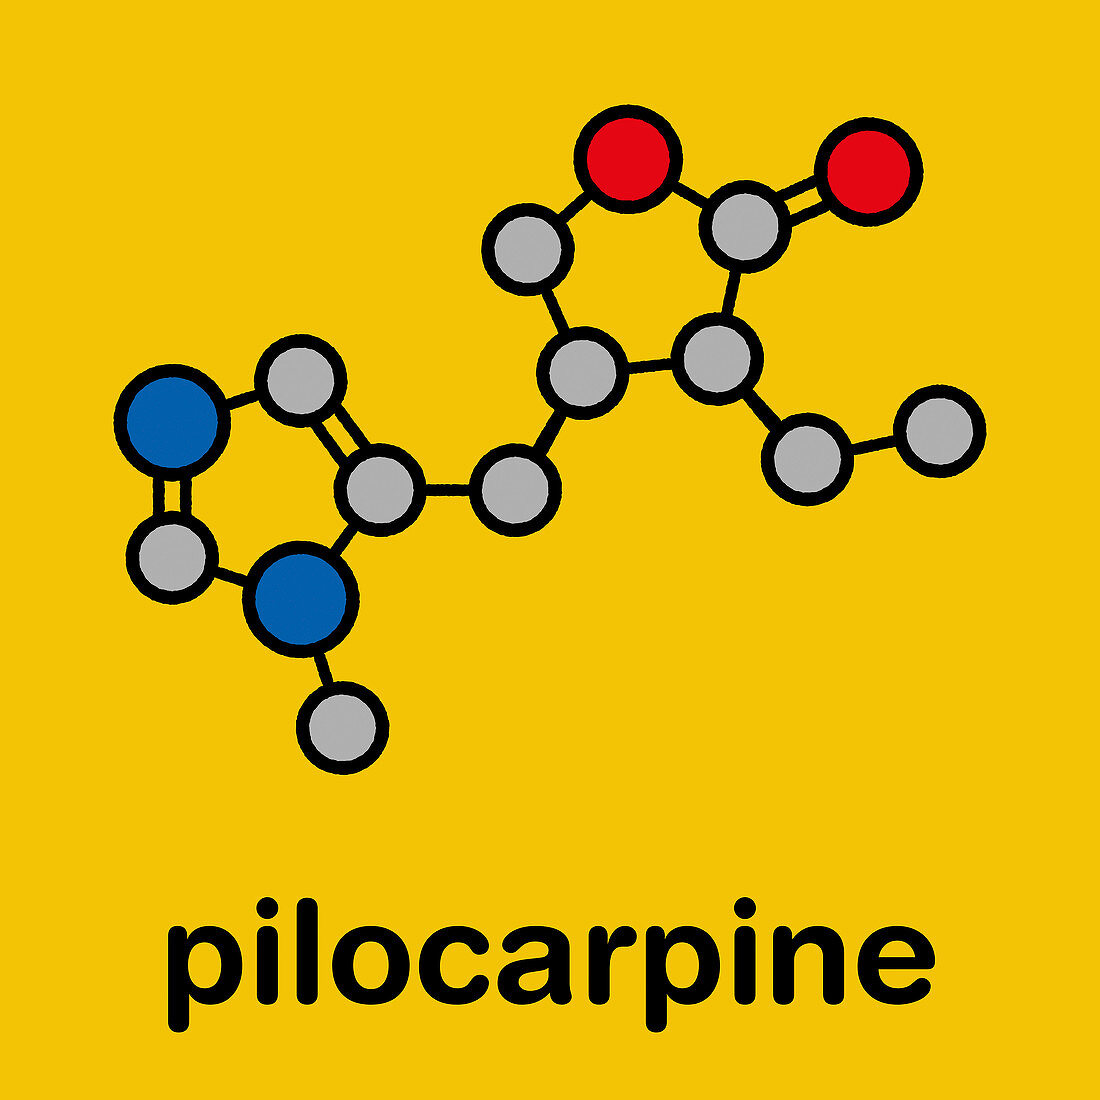 Pilocarpine drug molecule